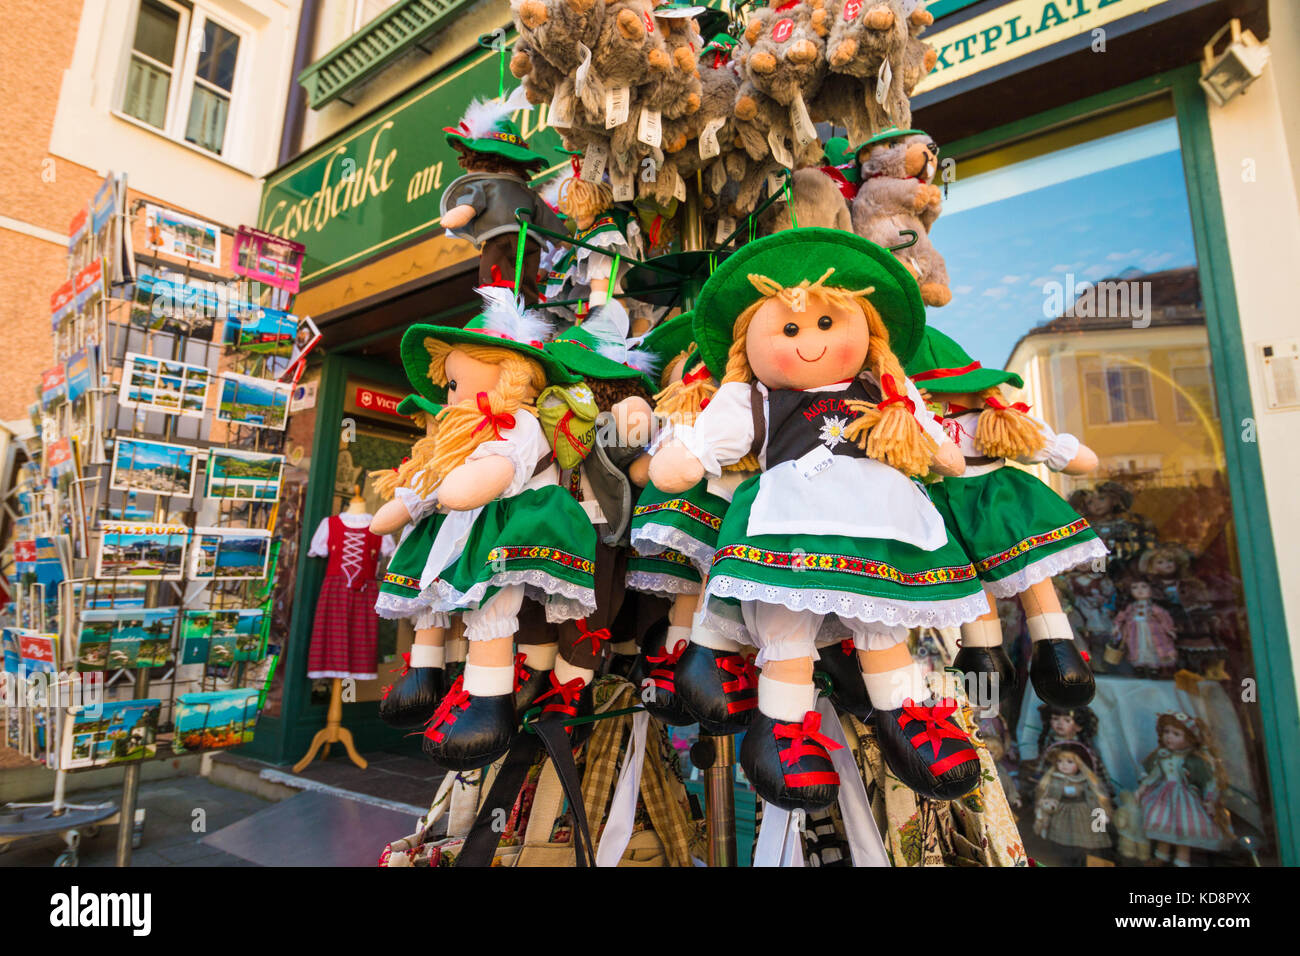 Mondsee, Austria - August 25, 2016: Souvenir stuffed cute dolls wearing dirndls displayed in front of a souvenir shop in Mondsee, Upper Austria. Stock Photo